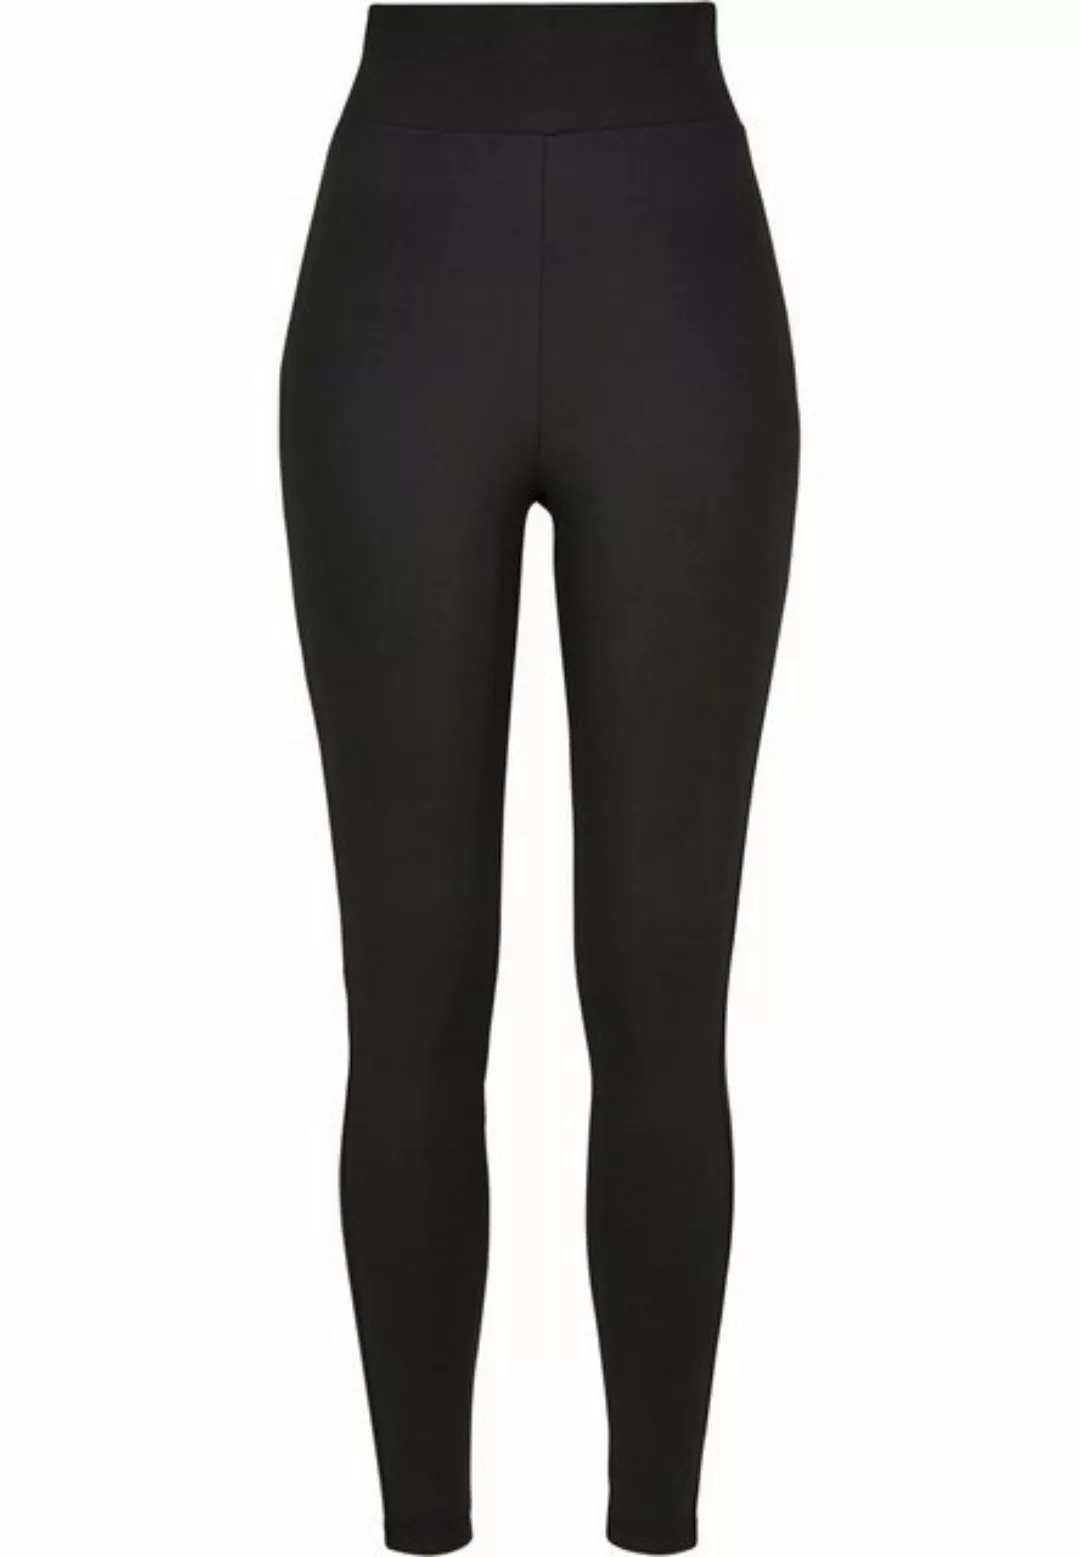 URBAN CLASSICS Leggings TB2859 - Ladies High Waist Leggings black 3XL günstig online kaufen